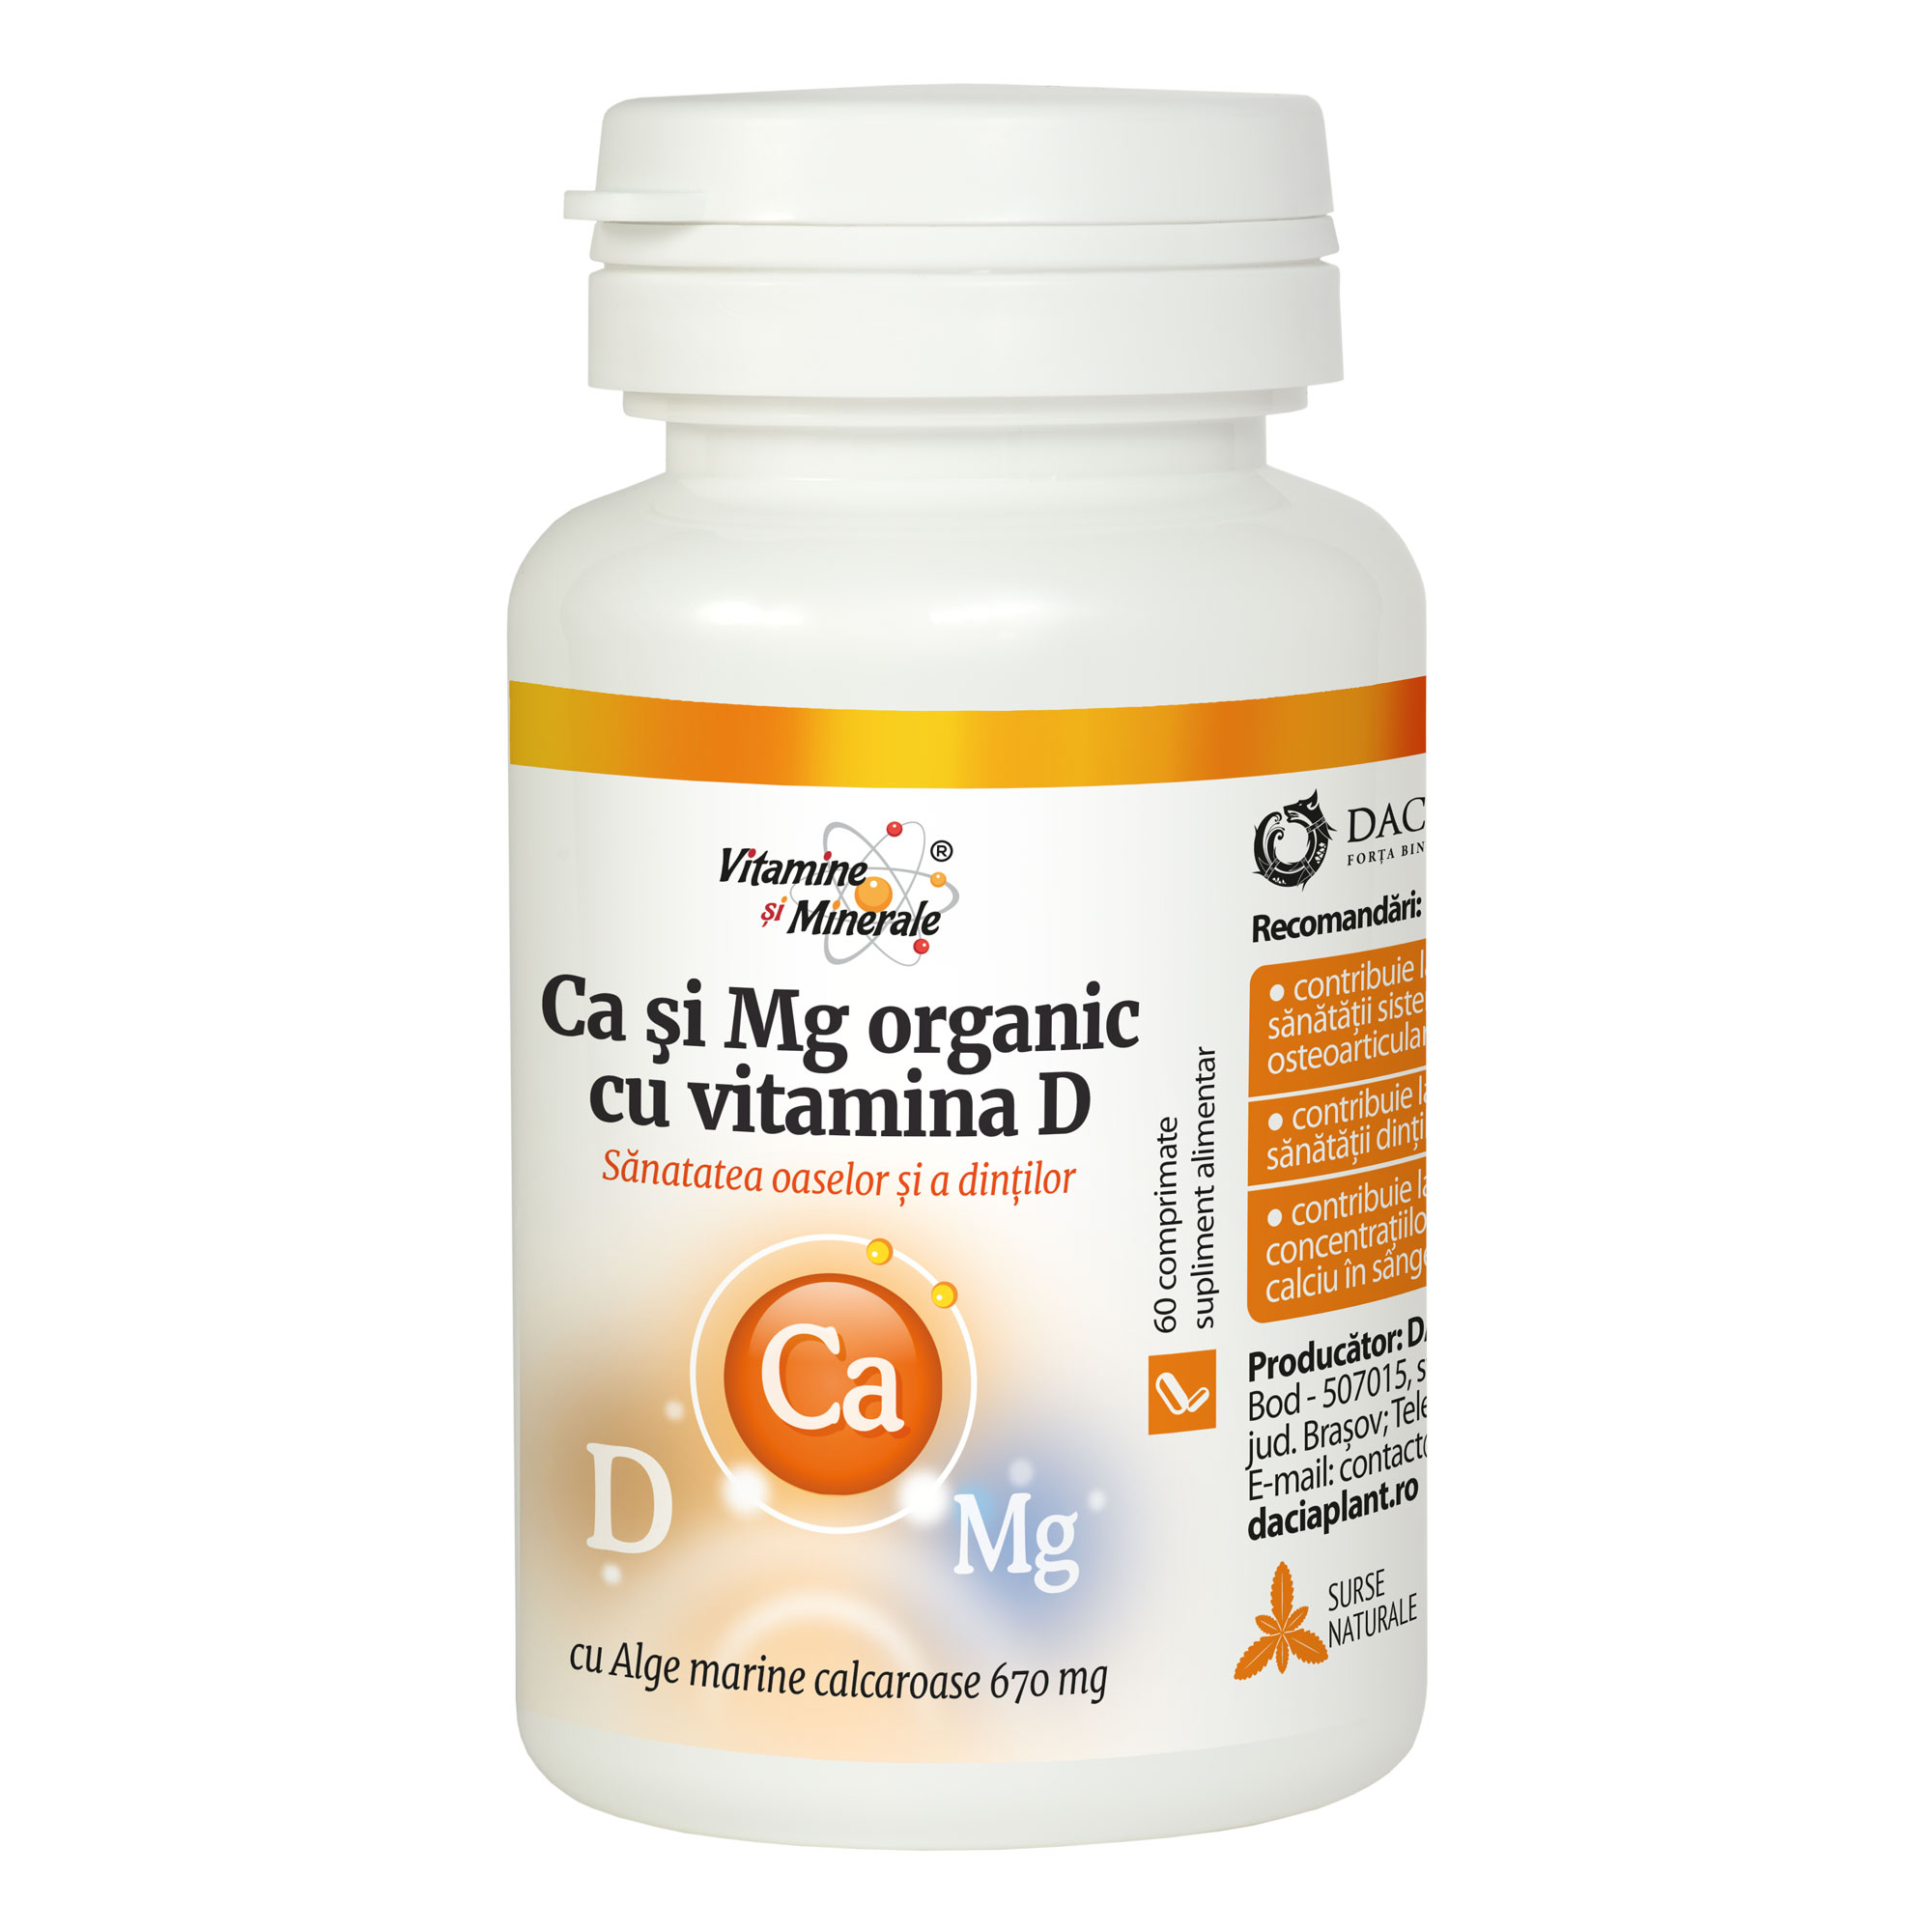 Ca si Mg Organic cu Vitamina D comprimate daciaplant.ro